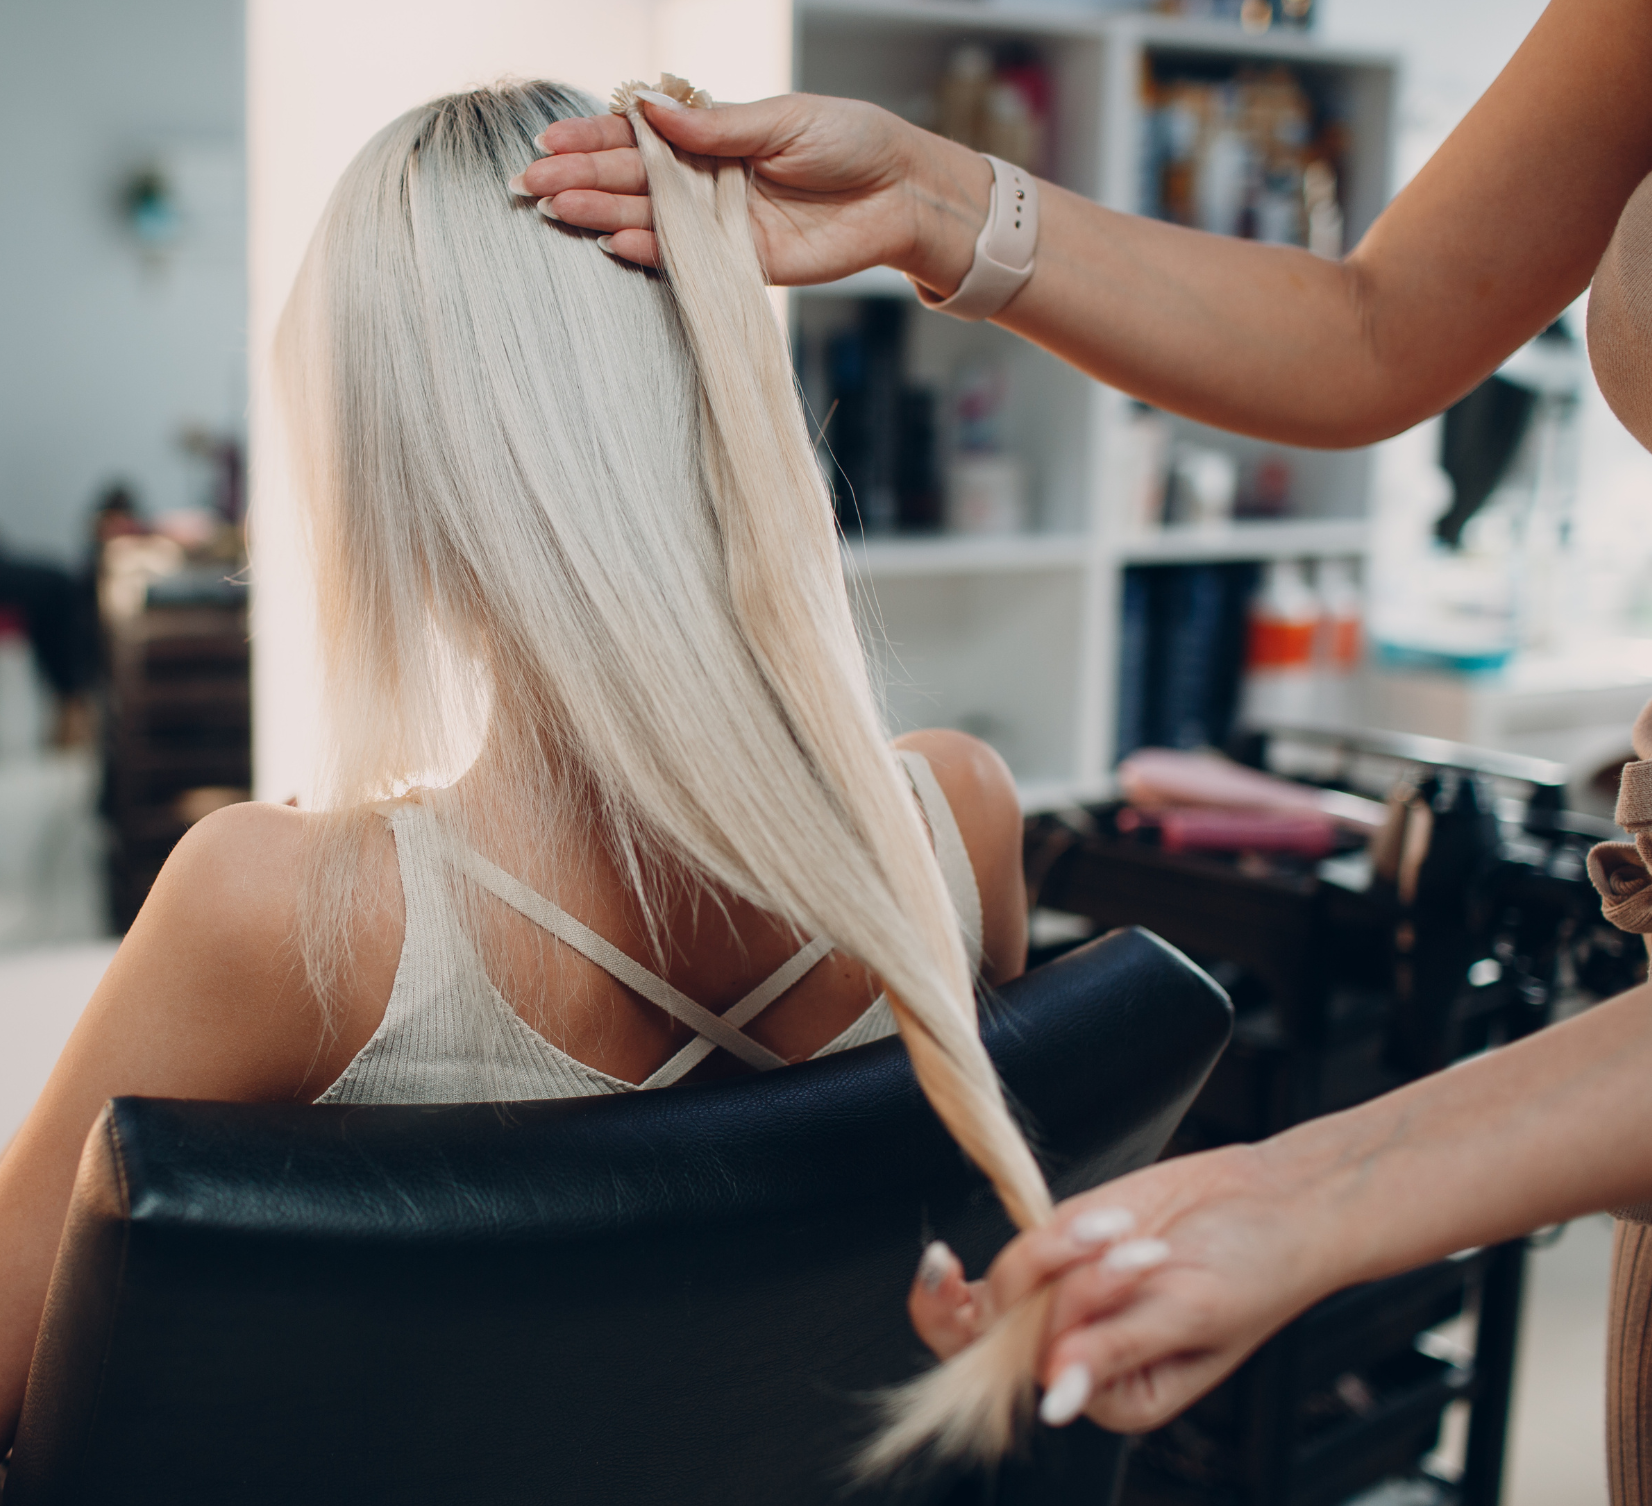 Hairdresser Applying Hair Extensions To A Client's Hair - Salon in Ballarat, VIC